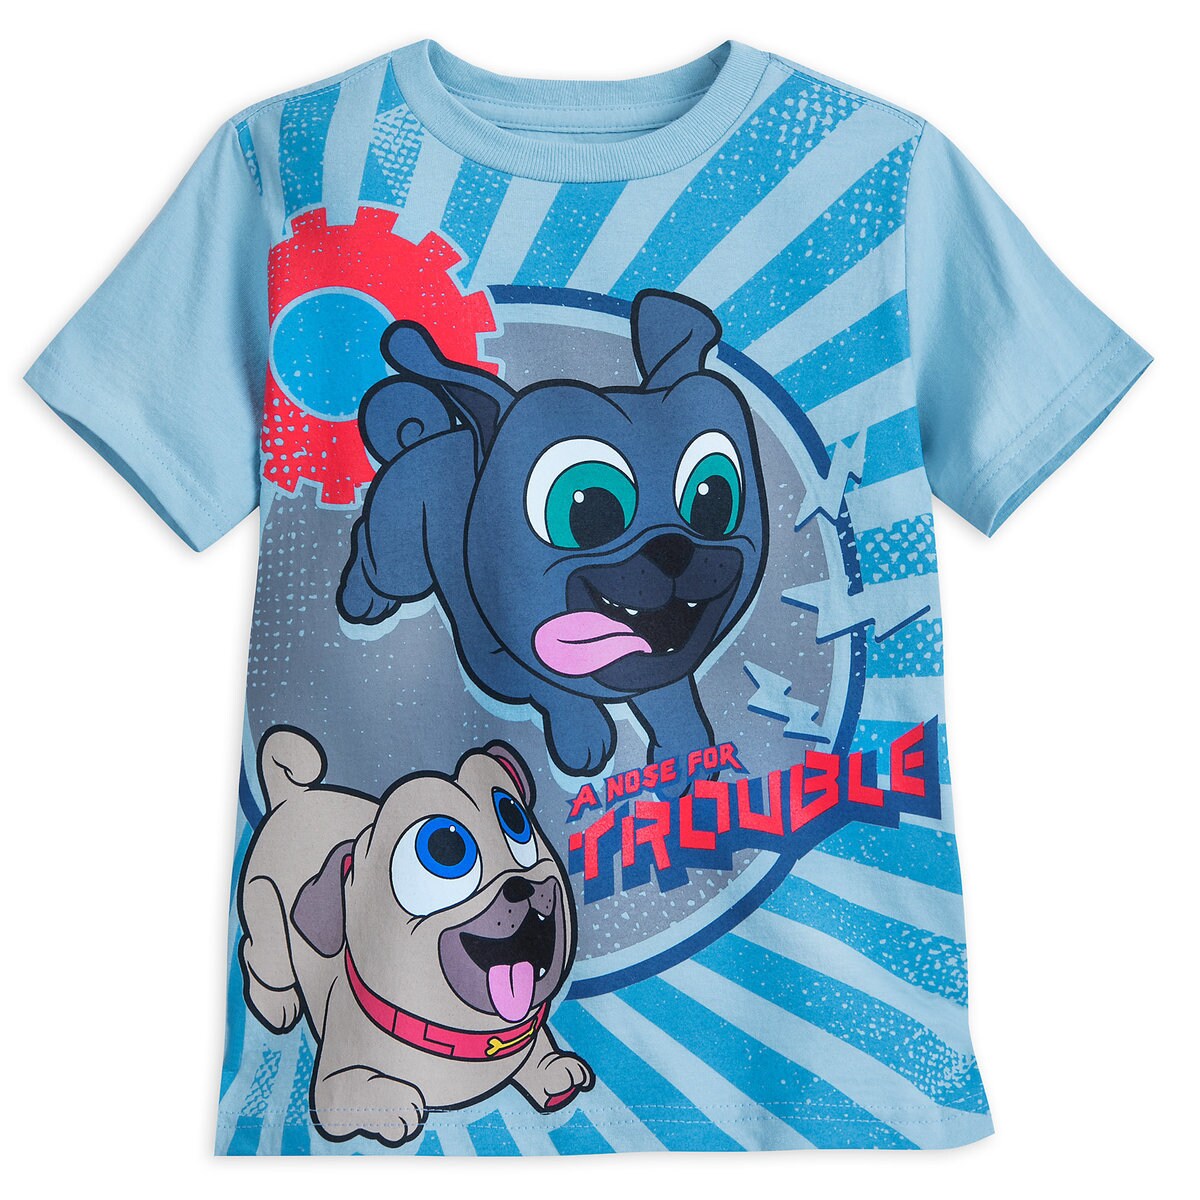 Mickey Mouse 1st Birthday Shirt Amazon Tissino - personalize roblox birthday shirt ebay